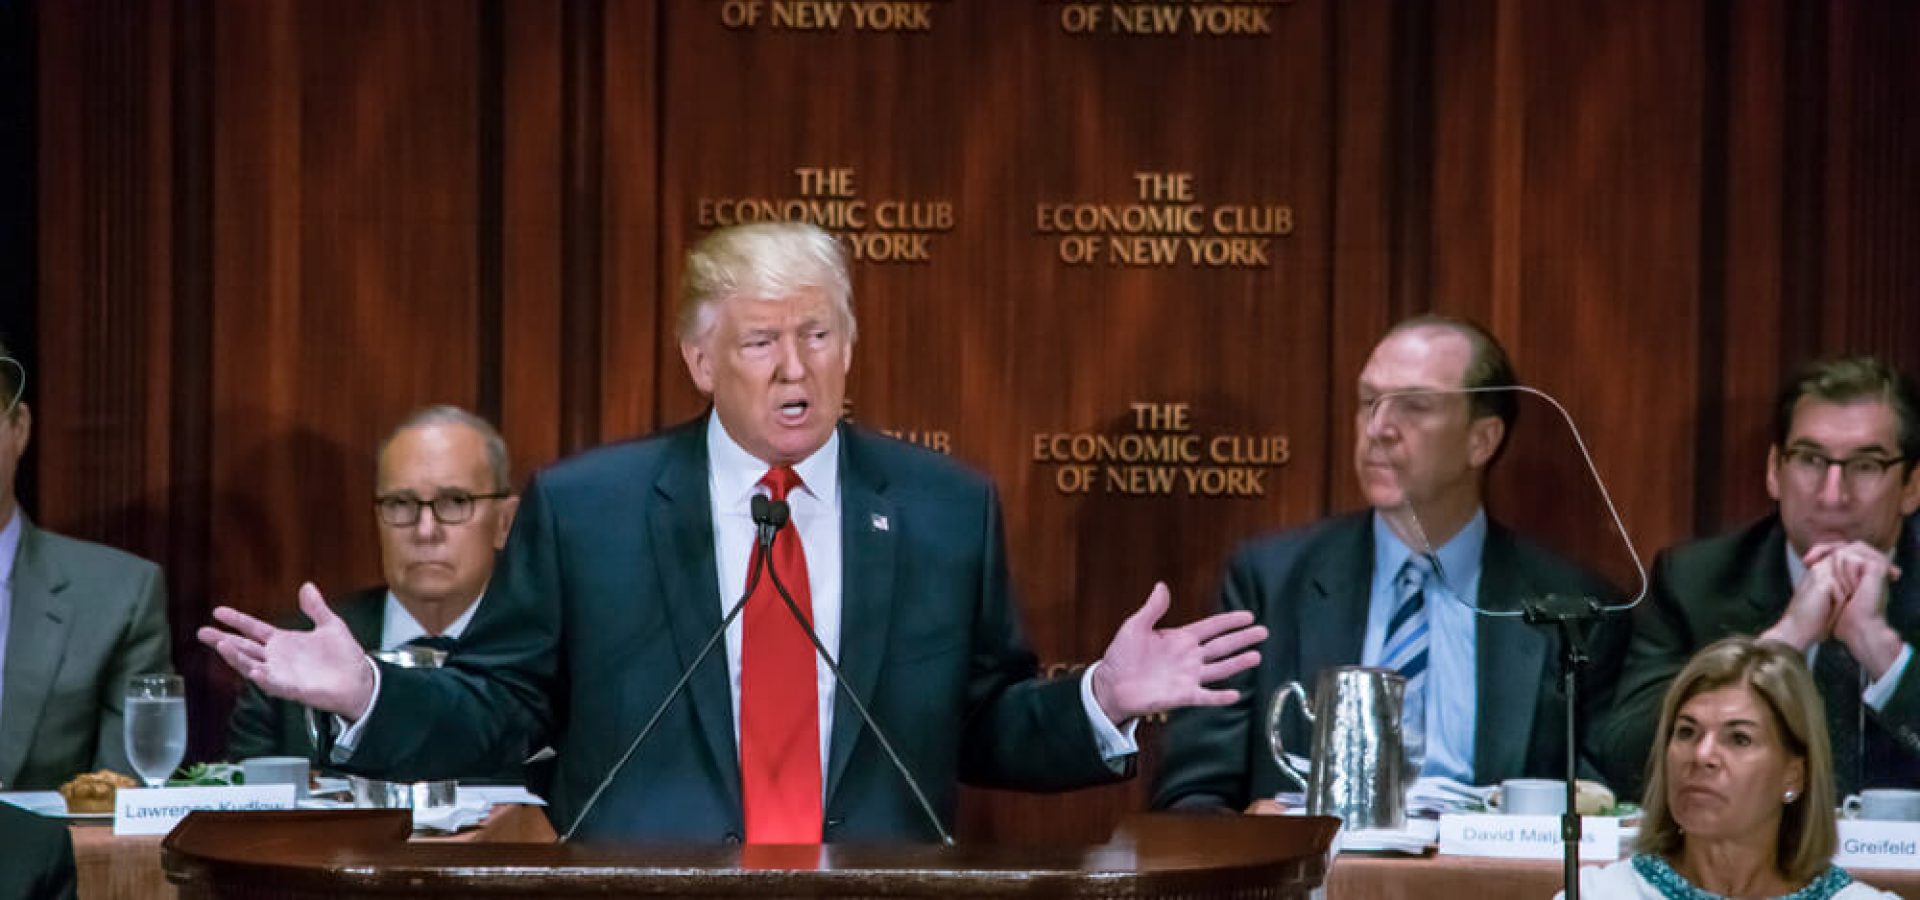 Trump speaking in an economic meeting with kudlow